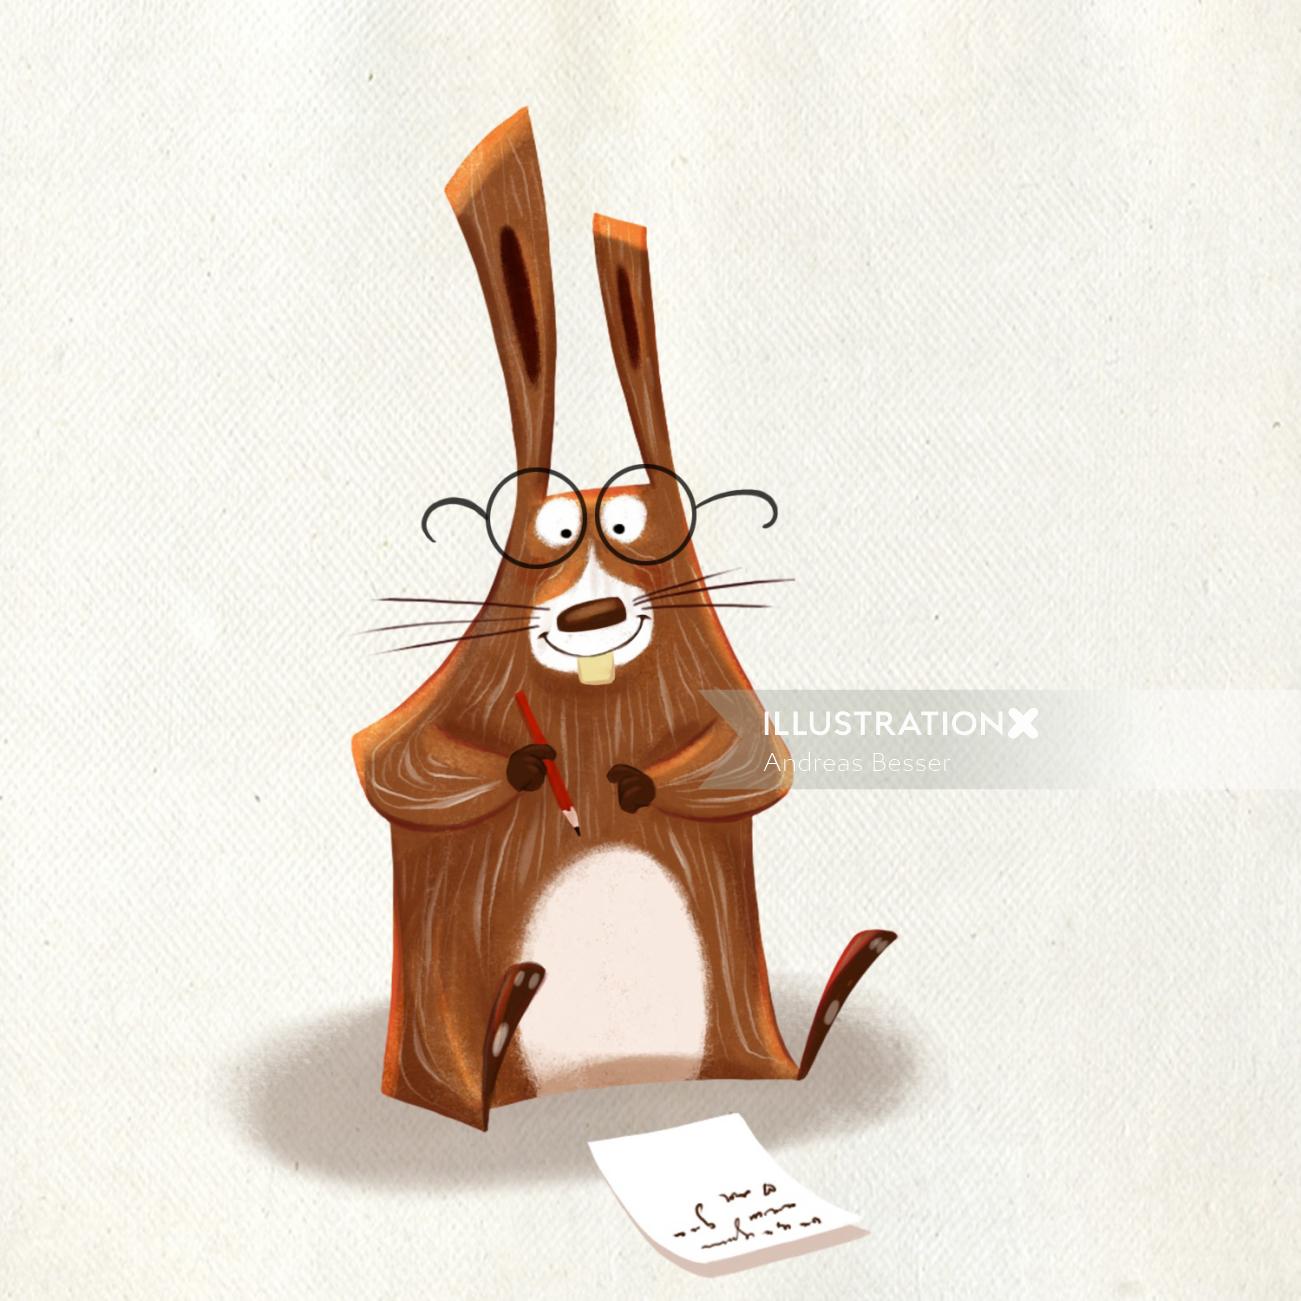 Illustration of a animal cartoon character